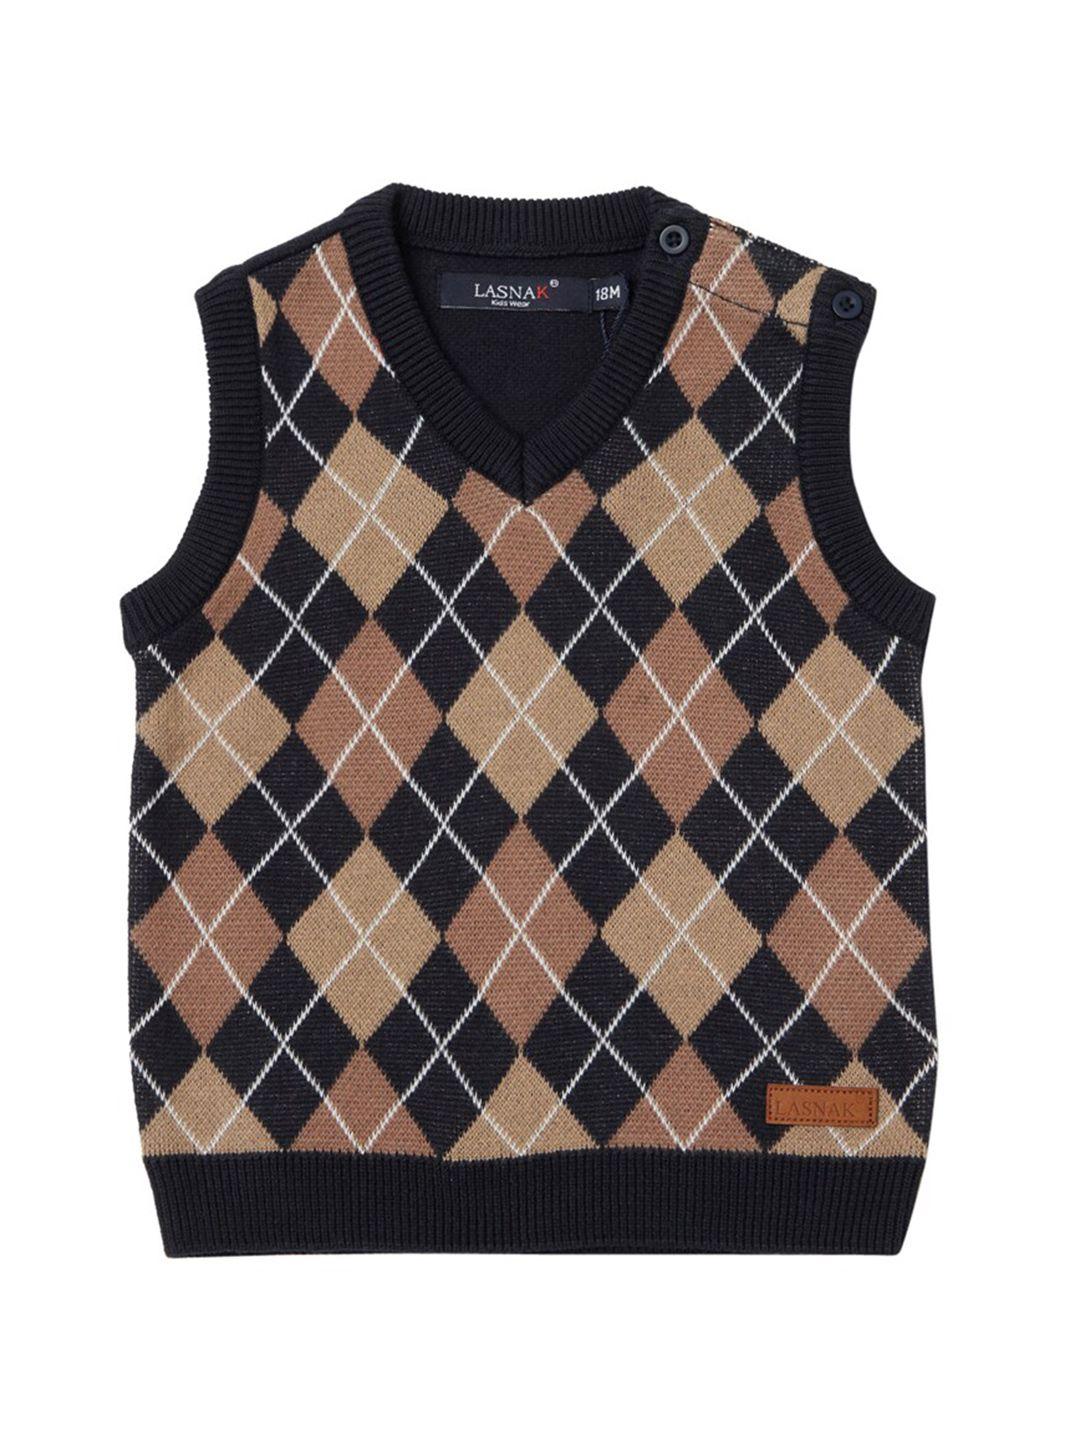 lasnak boys navy blue & brown printed sweater vest